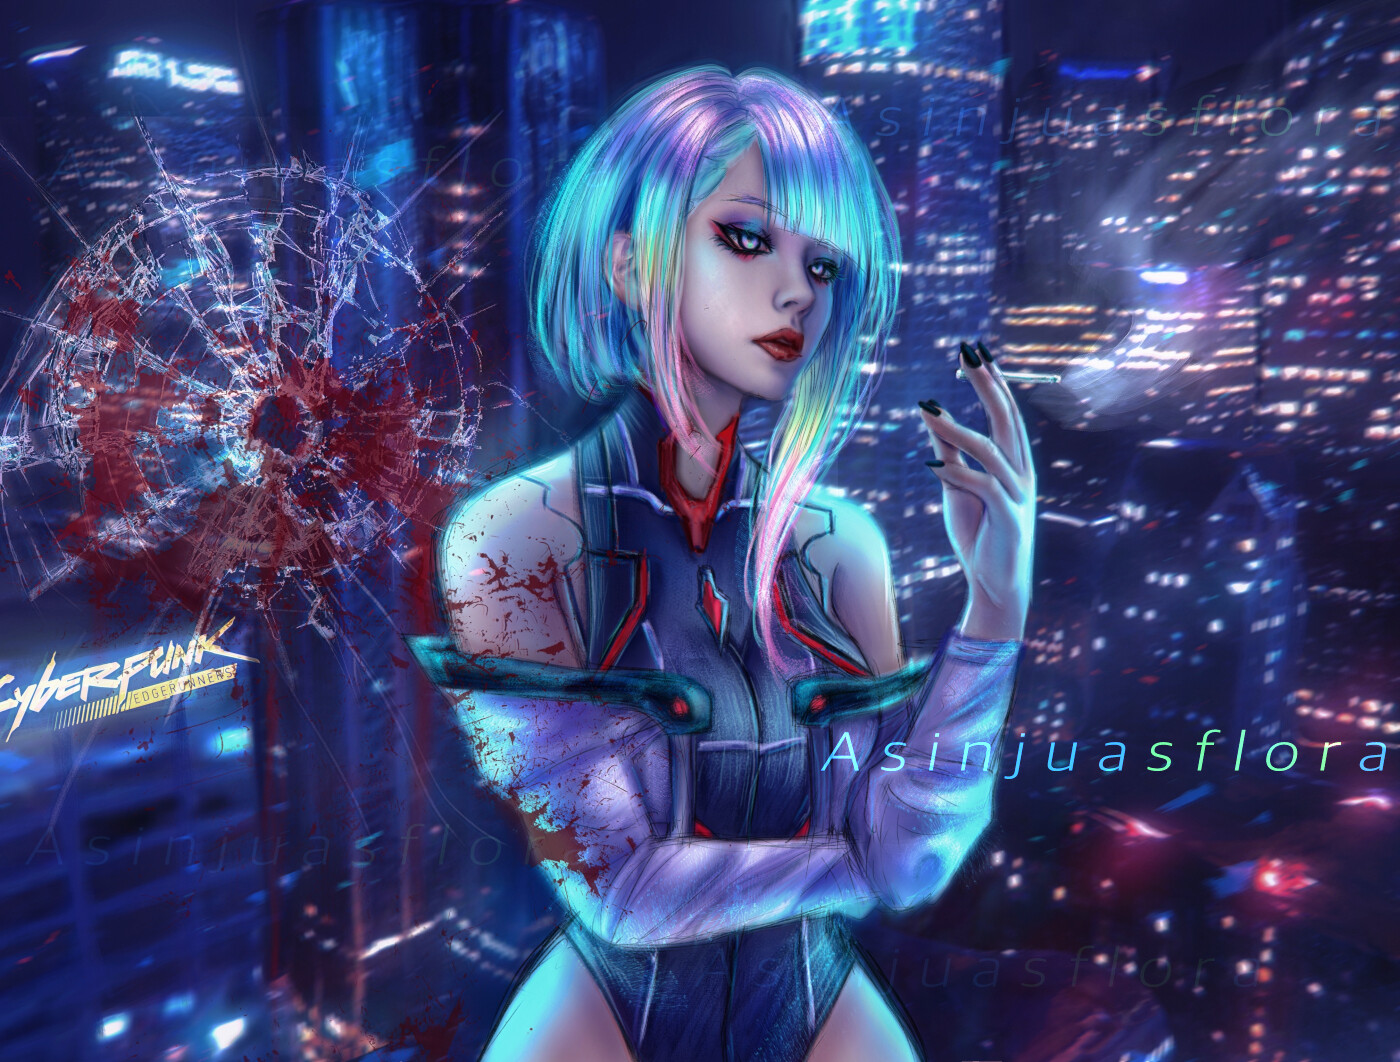 ArtStation - Lucy-CyberpunkEdgerunners サイバーパンク エッジランナーズ